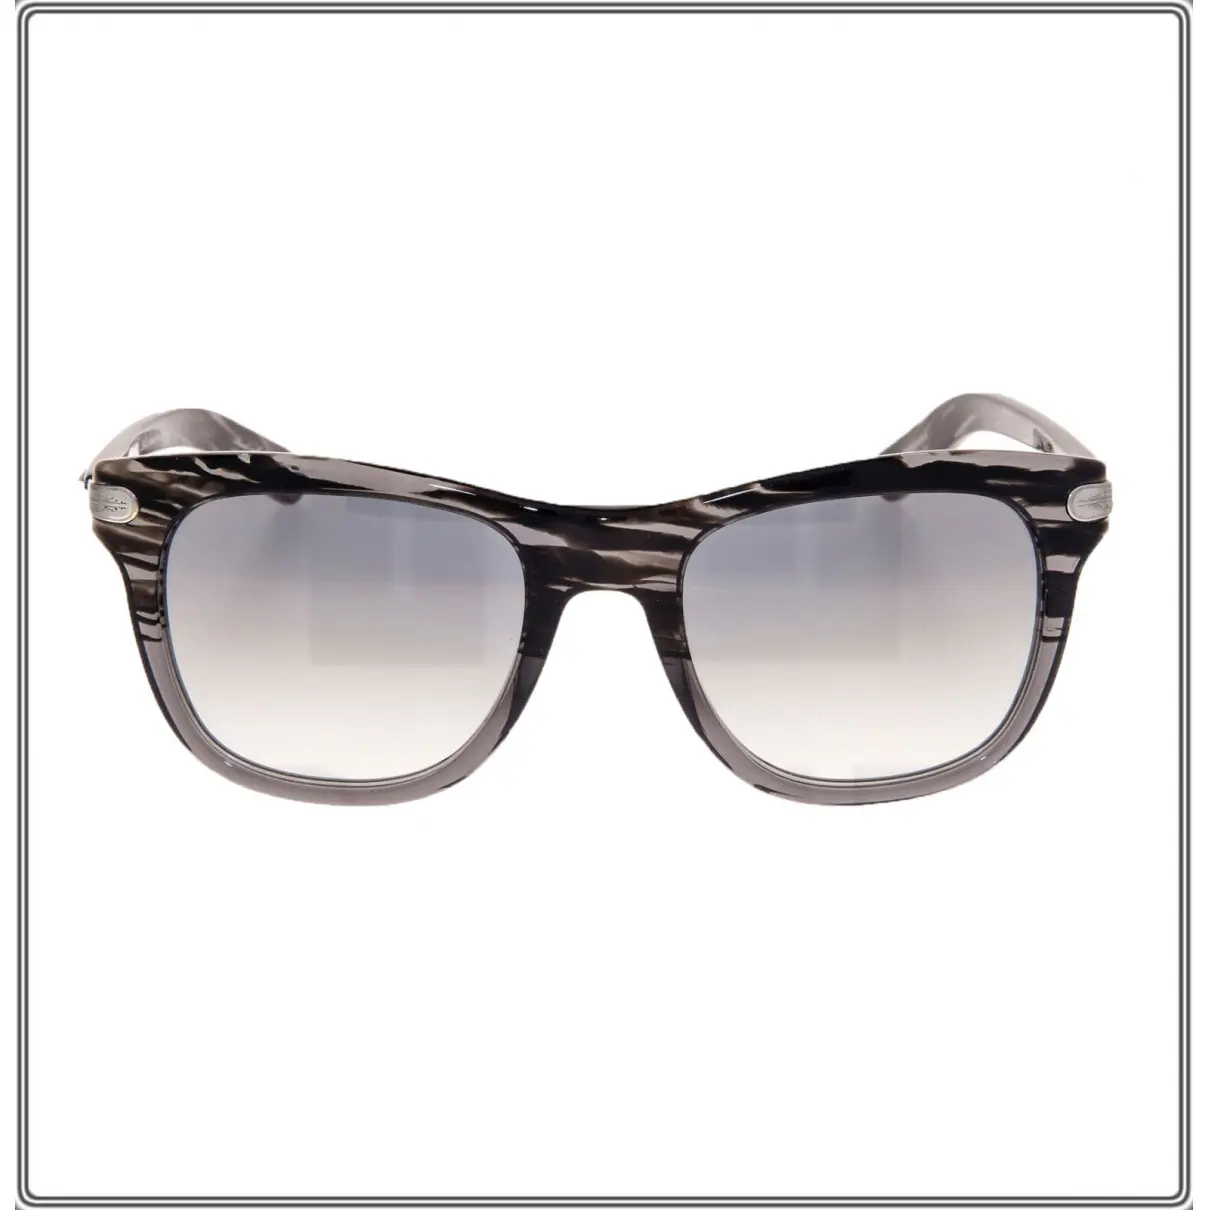 Buy Oliver Peoples Sunglasses online